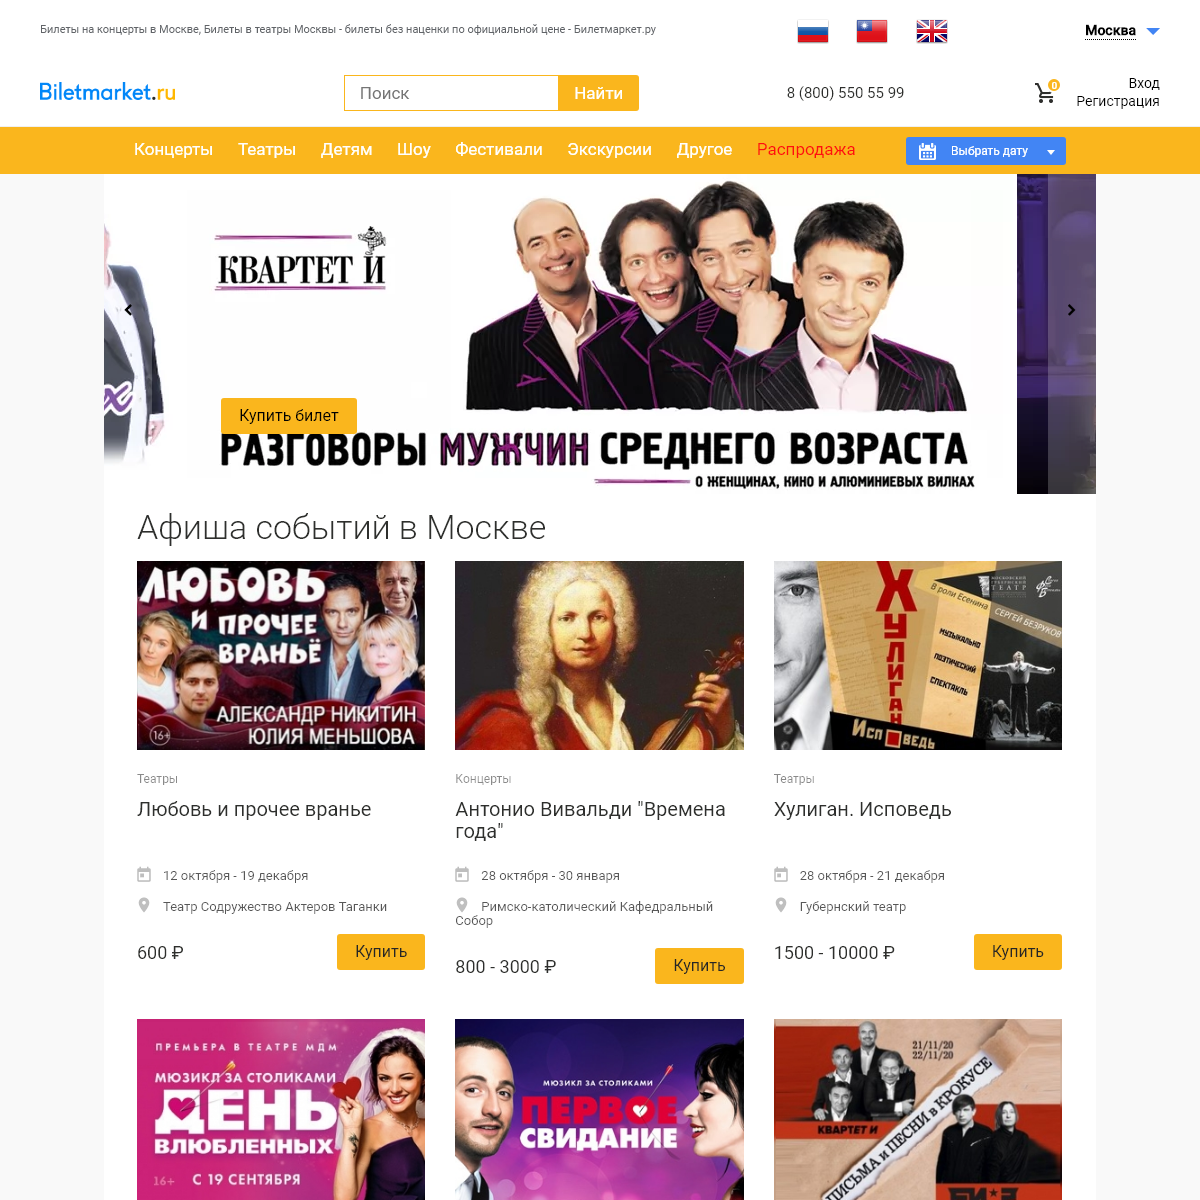 A complete backup of biletmarket.ru